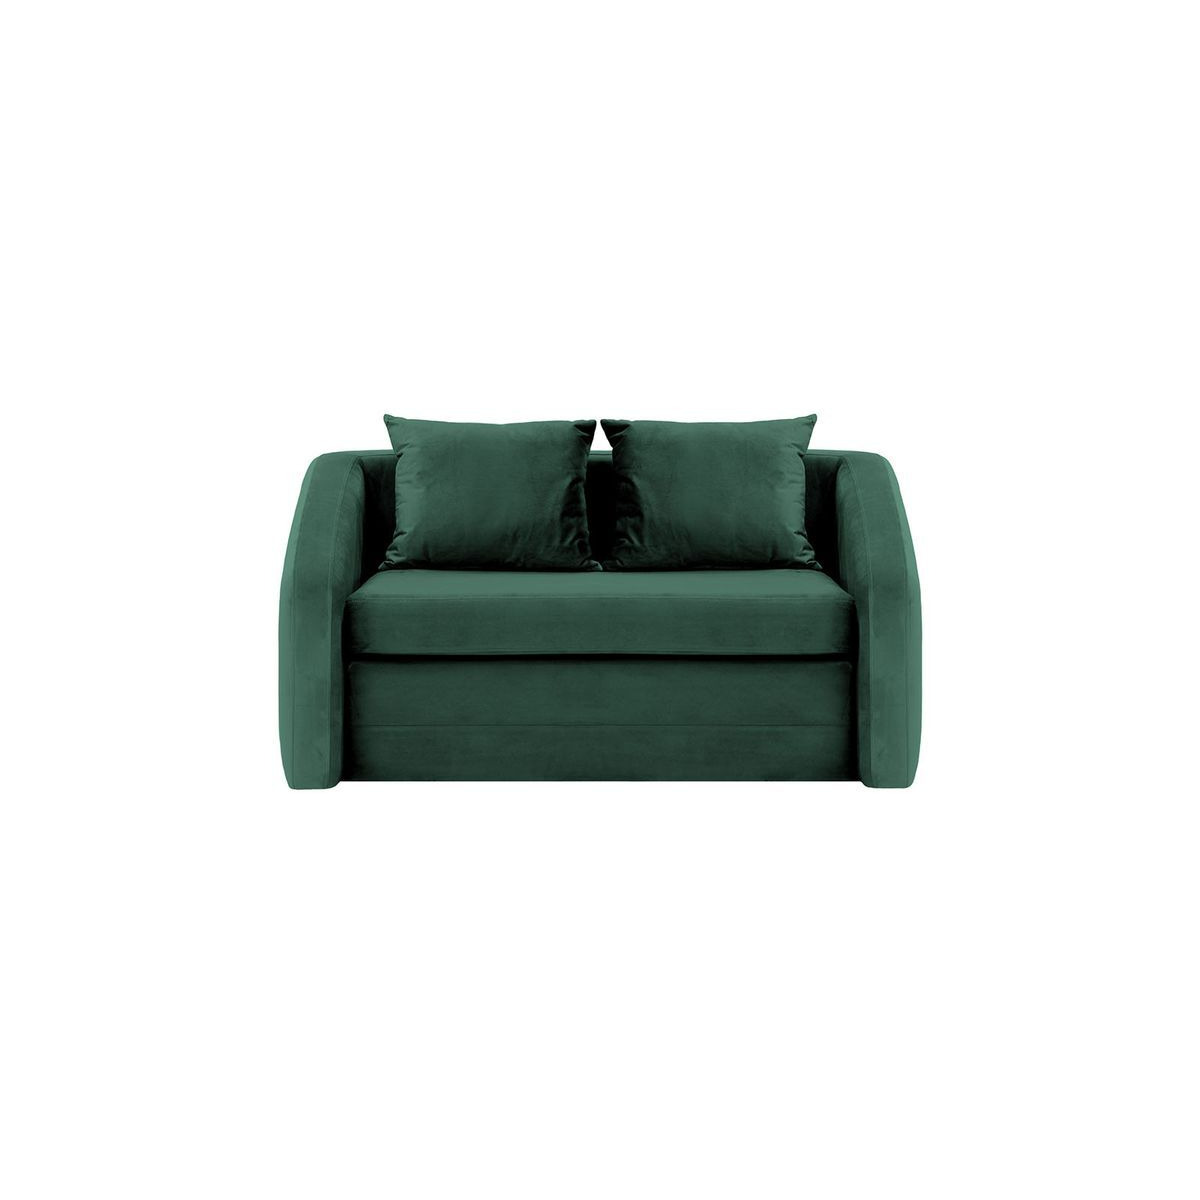 Alma 2 Seater Sofa Bed, dark green - image 1